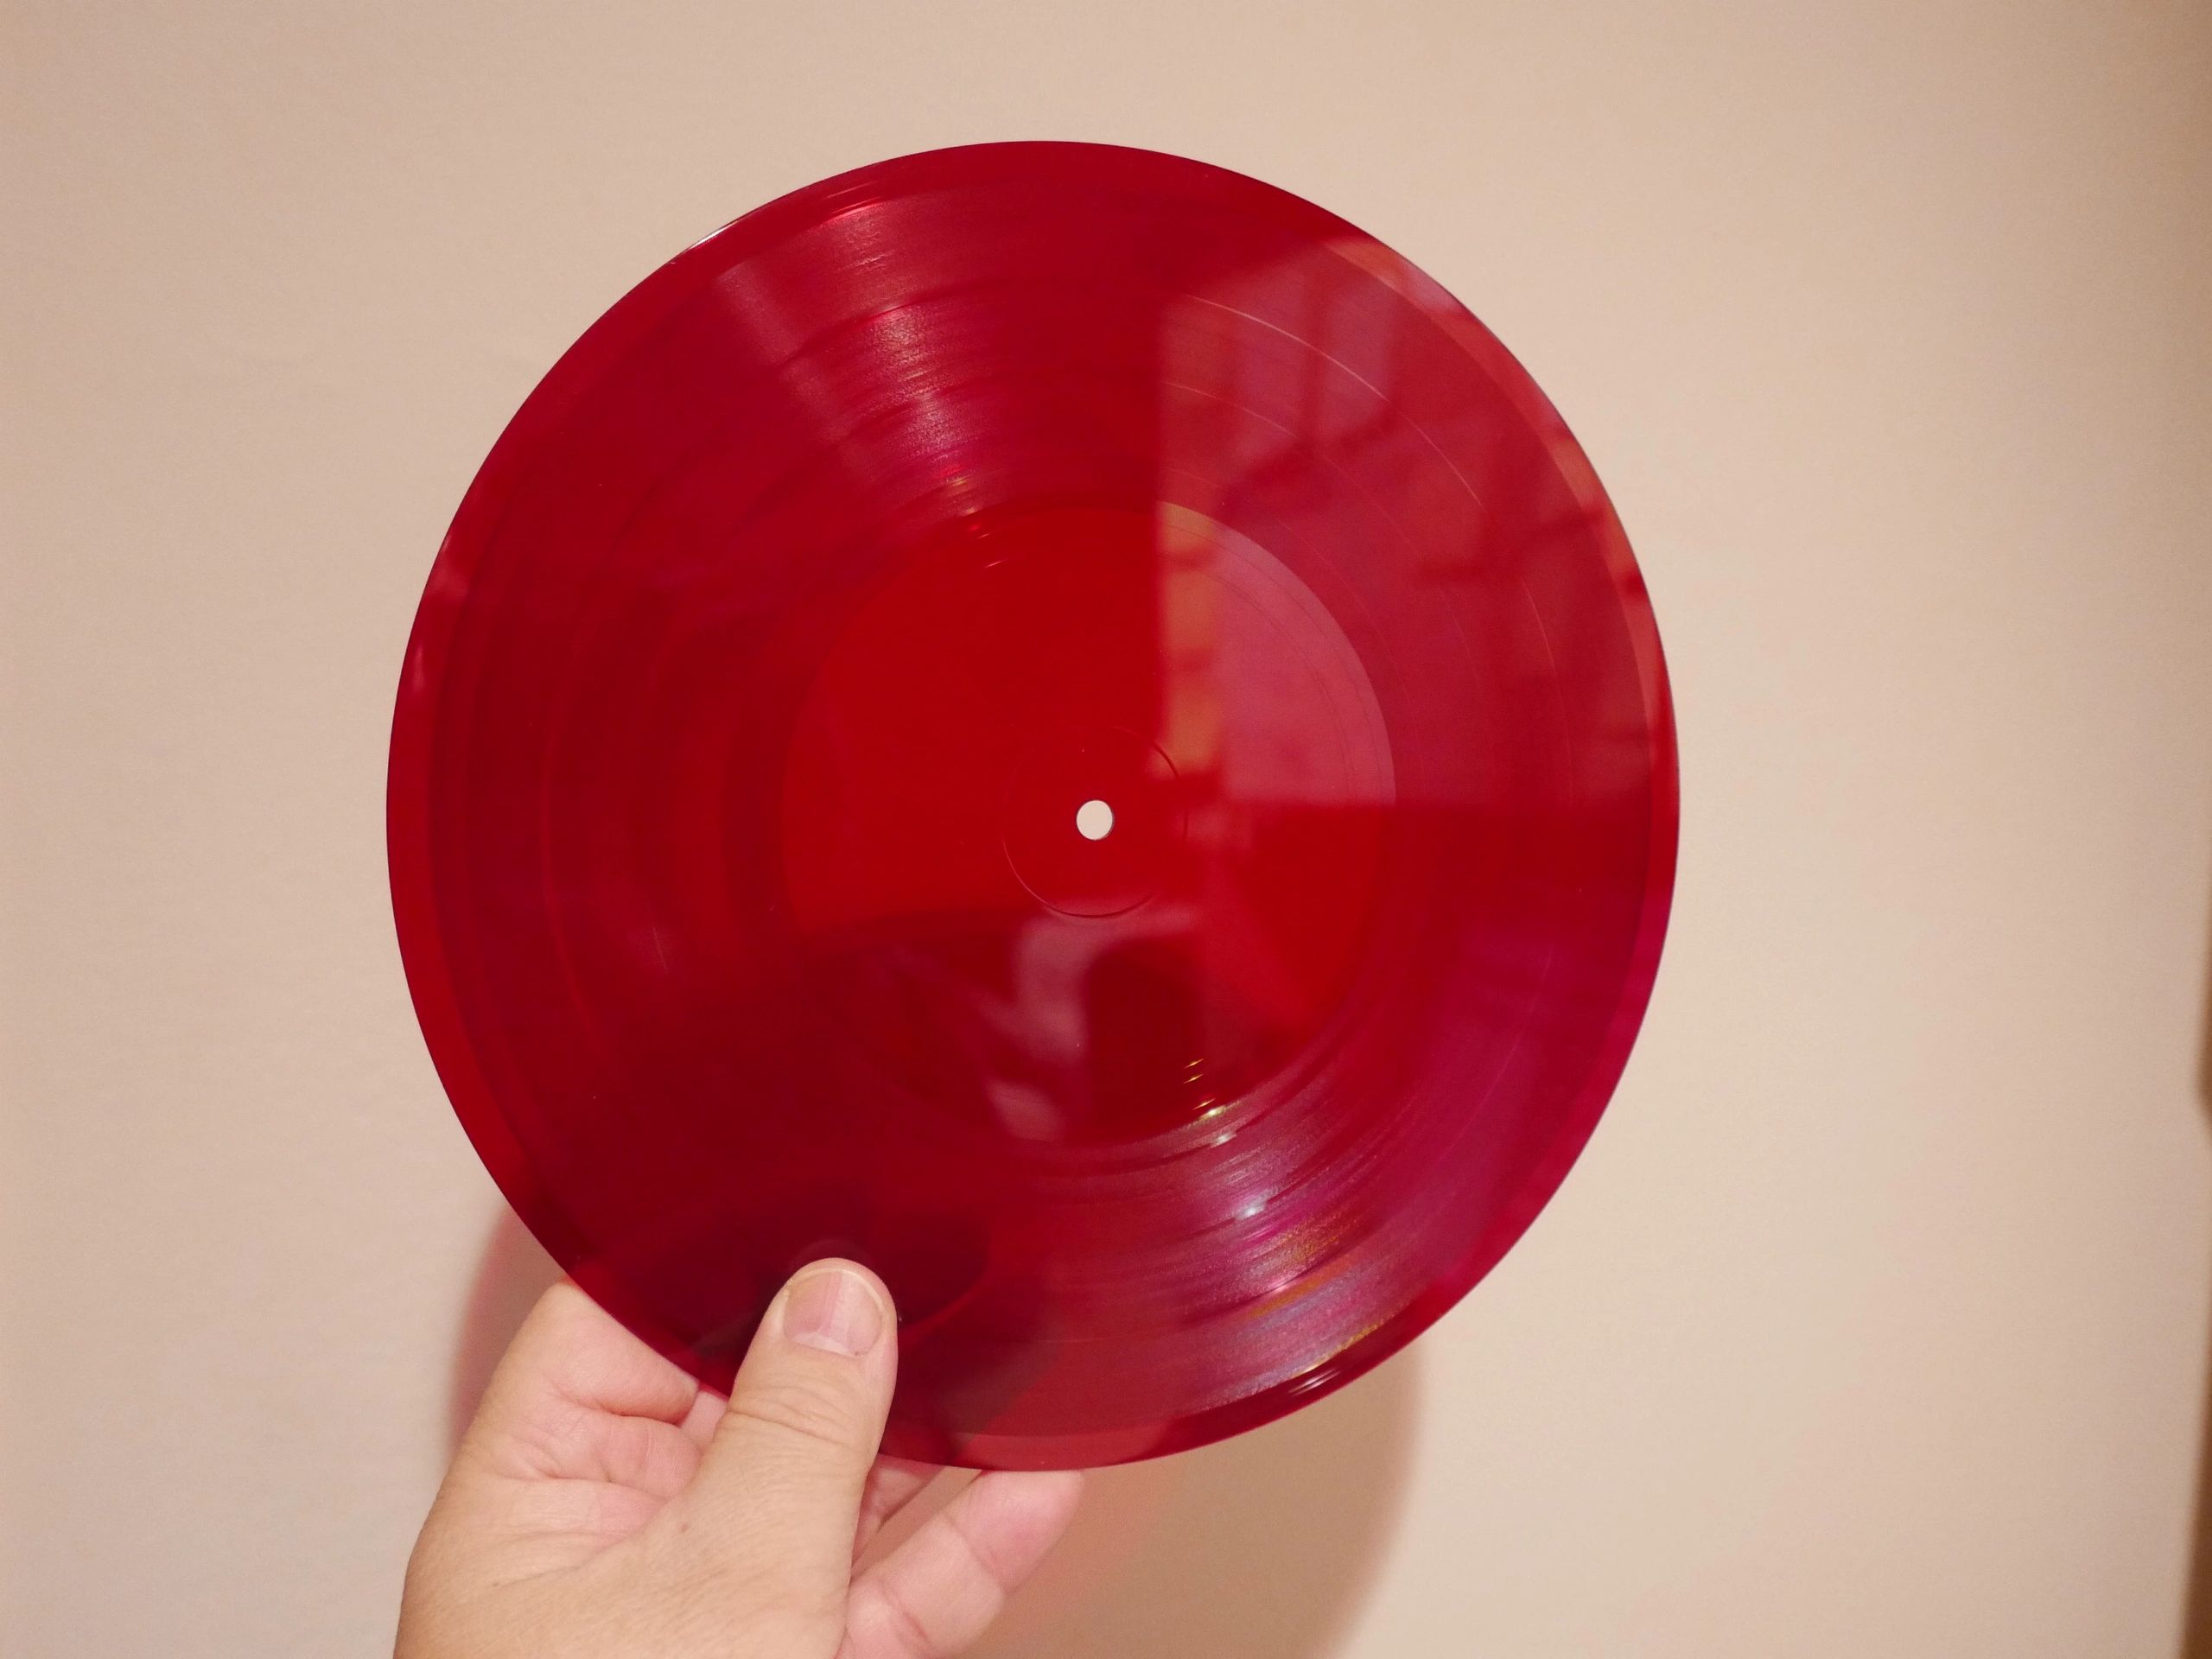 custom vinyl records usa